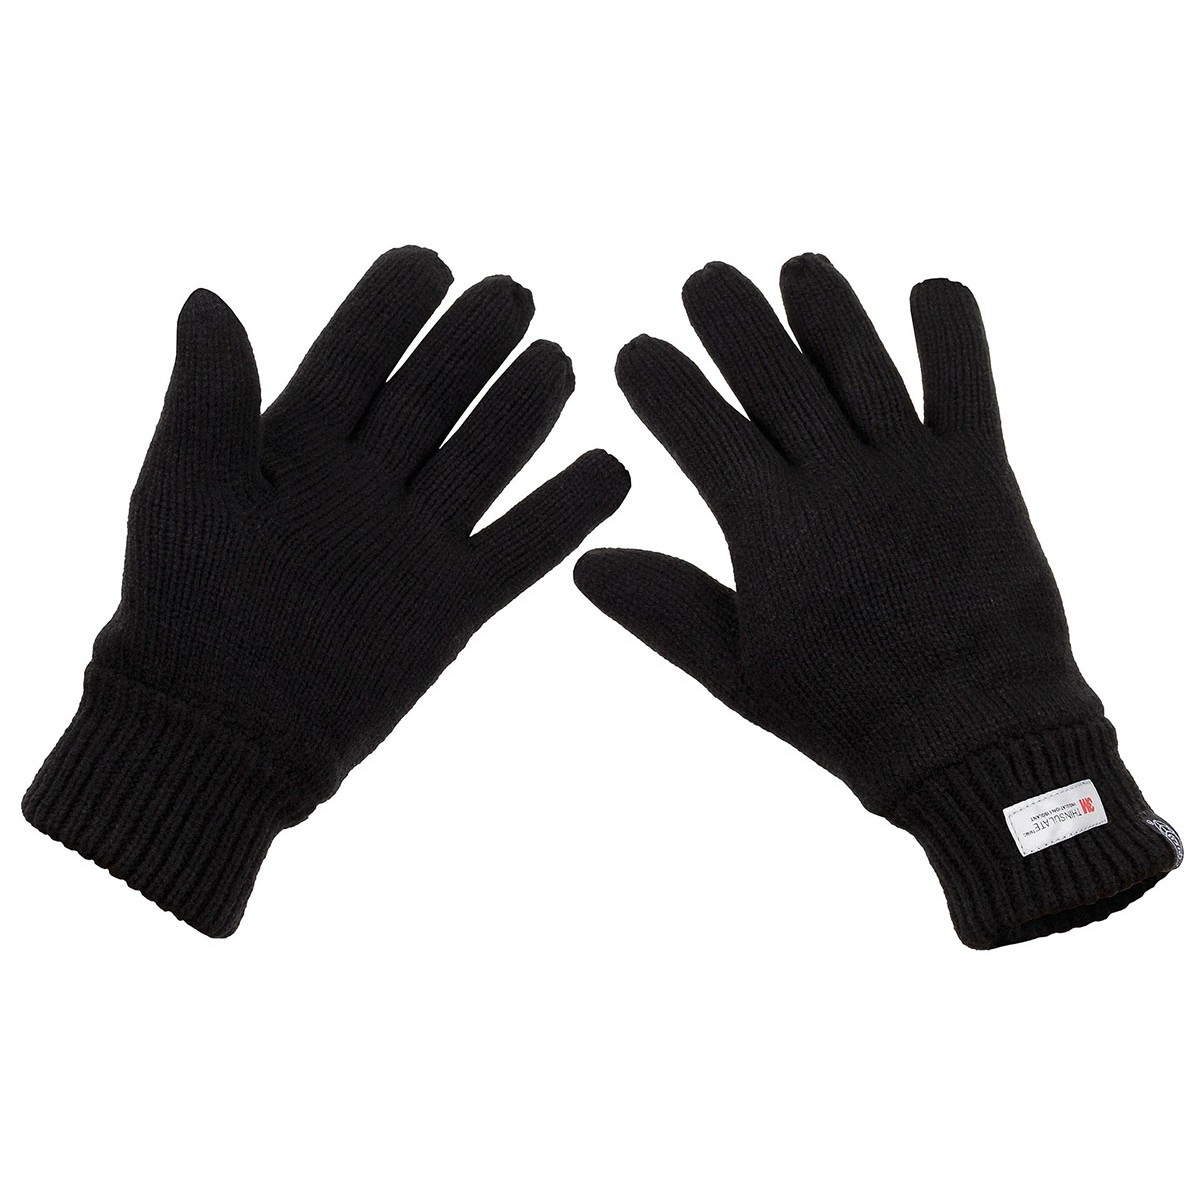 Pletené rukavice zateplené MFH Thinsulate - černé, L